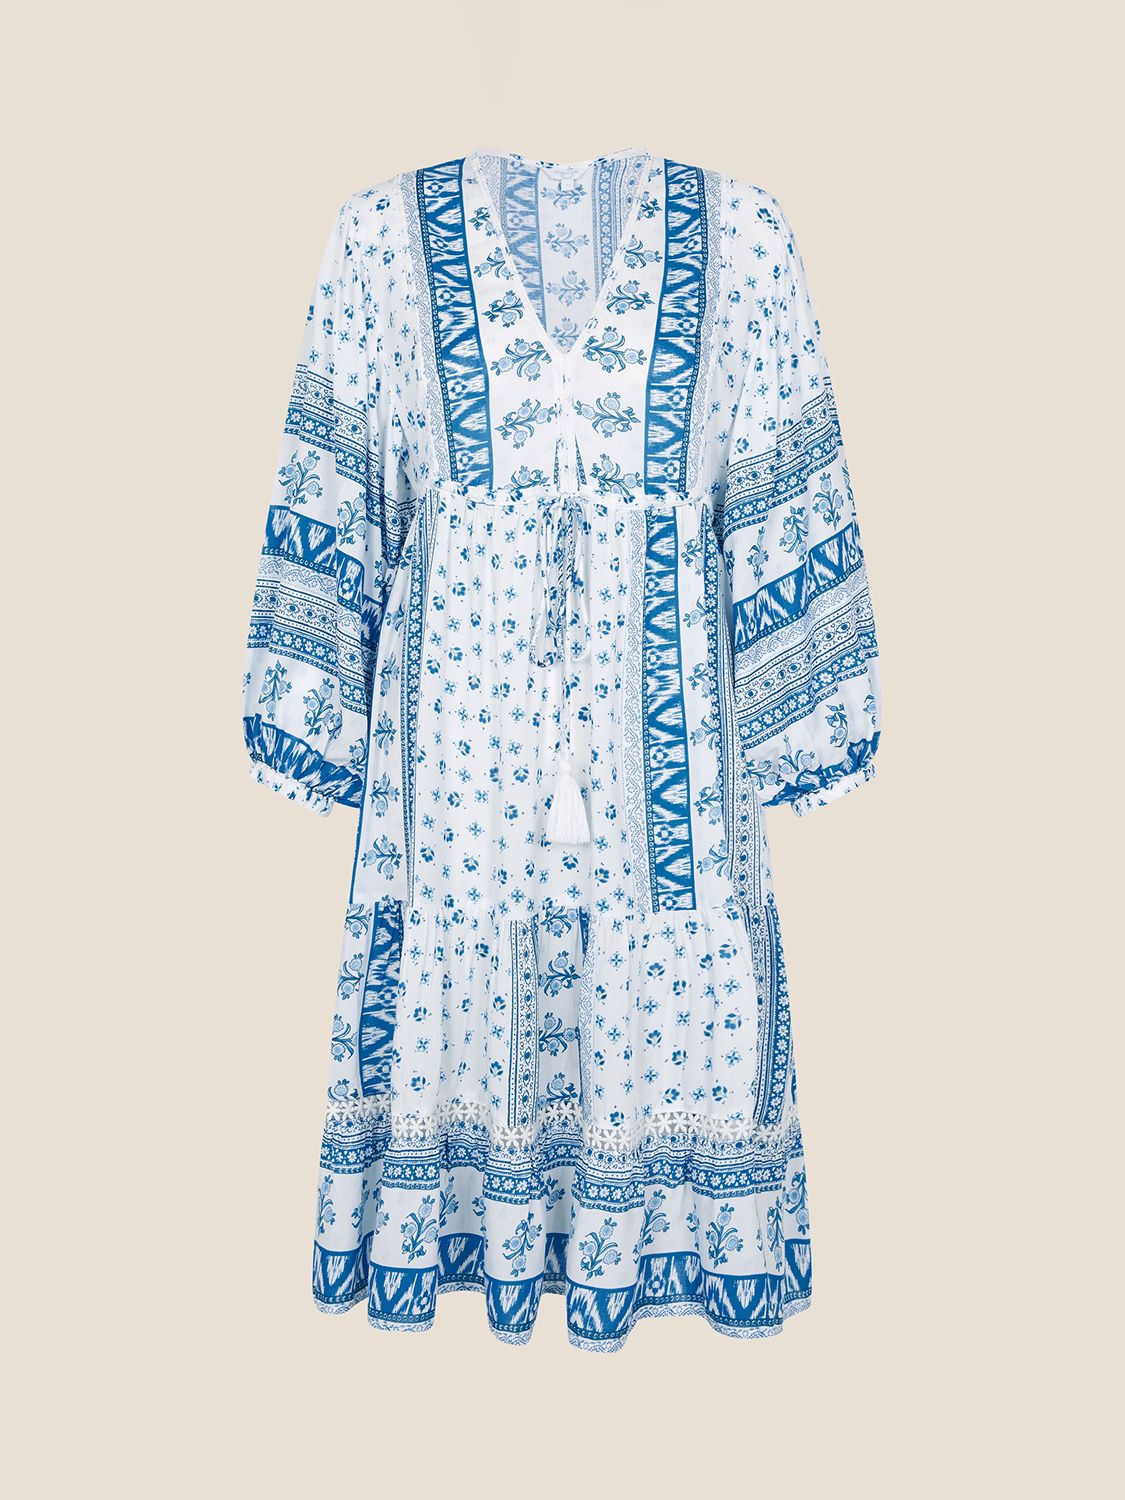 Monsoon Border Tunic Dress, Blue/White, S